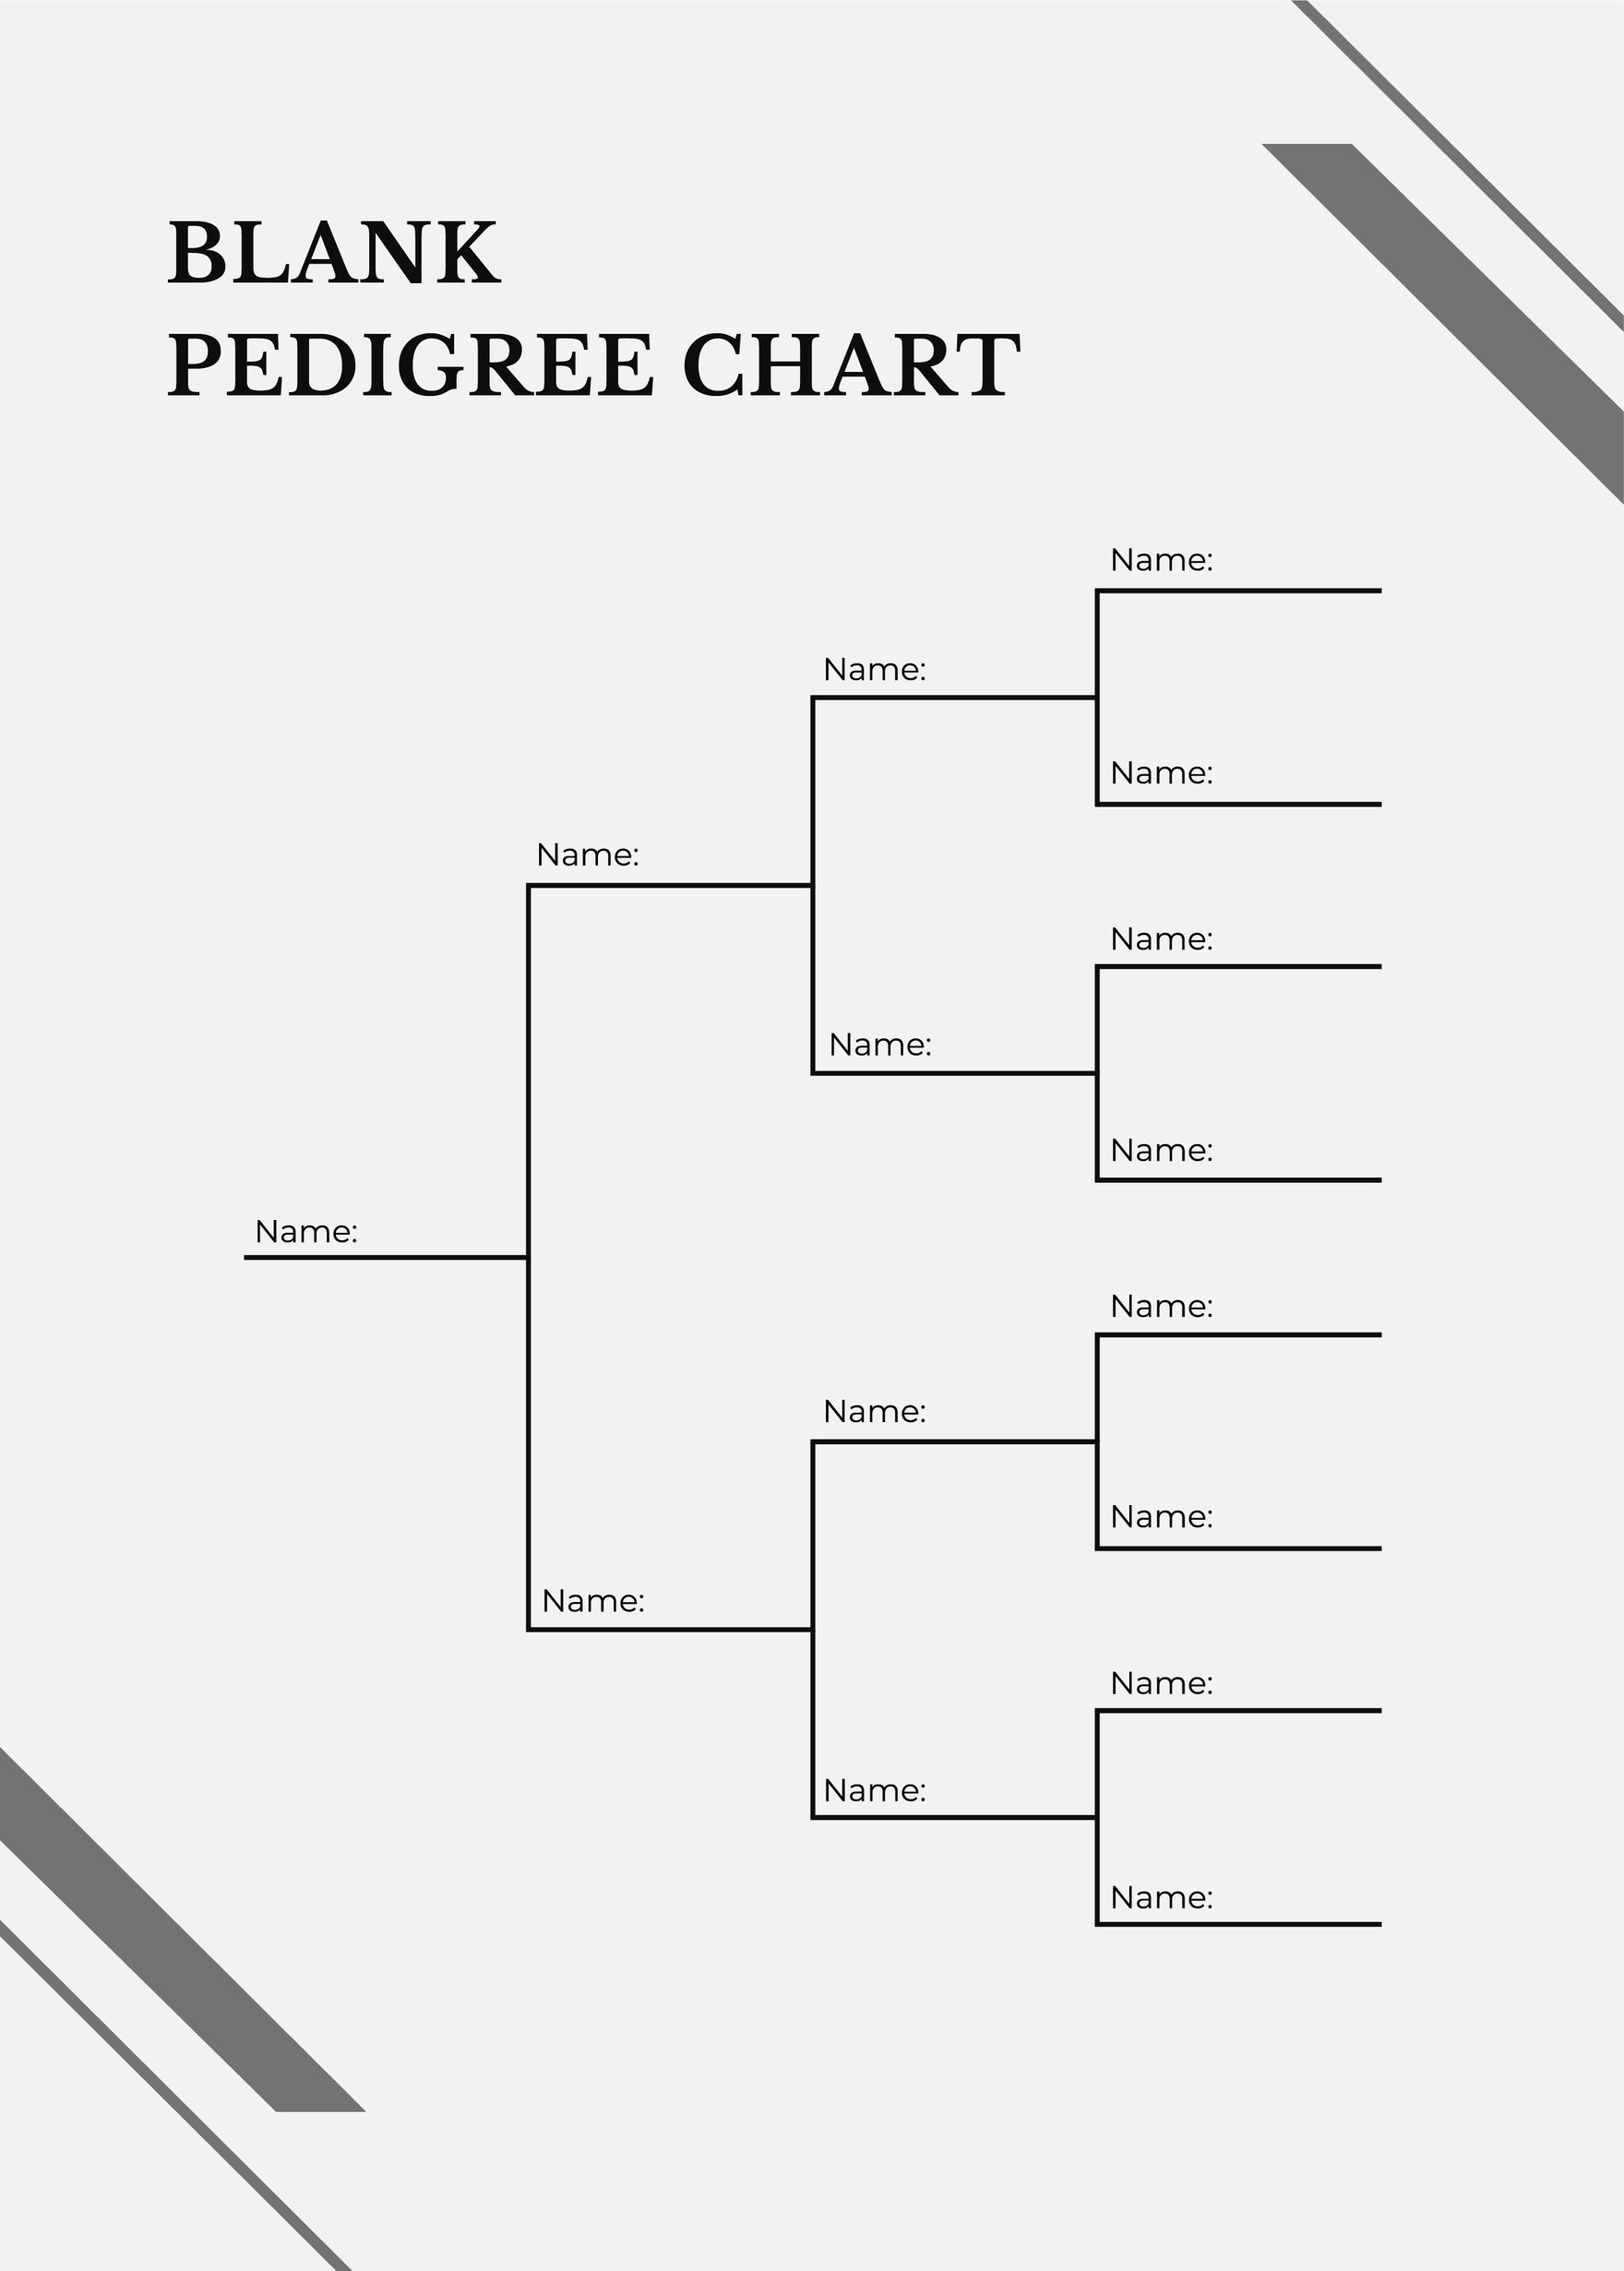 Blank Pedigree Chart in PDF, Illustrator